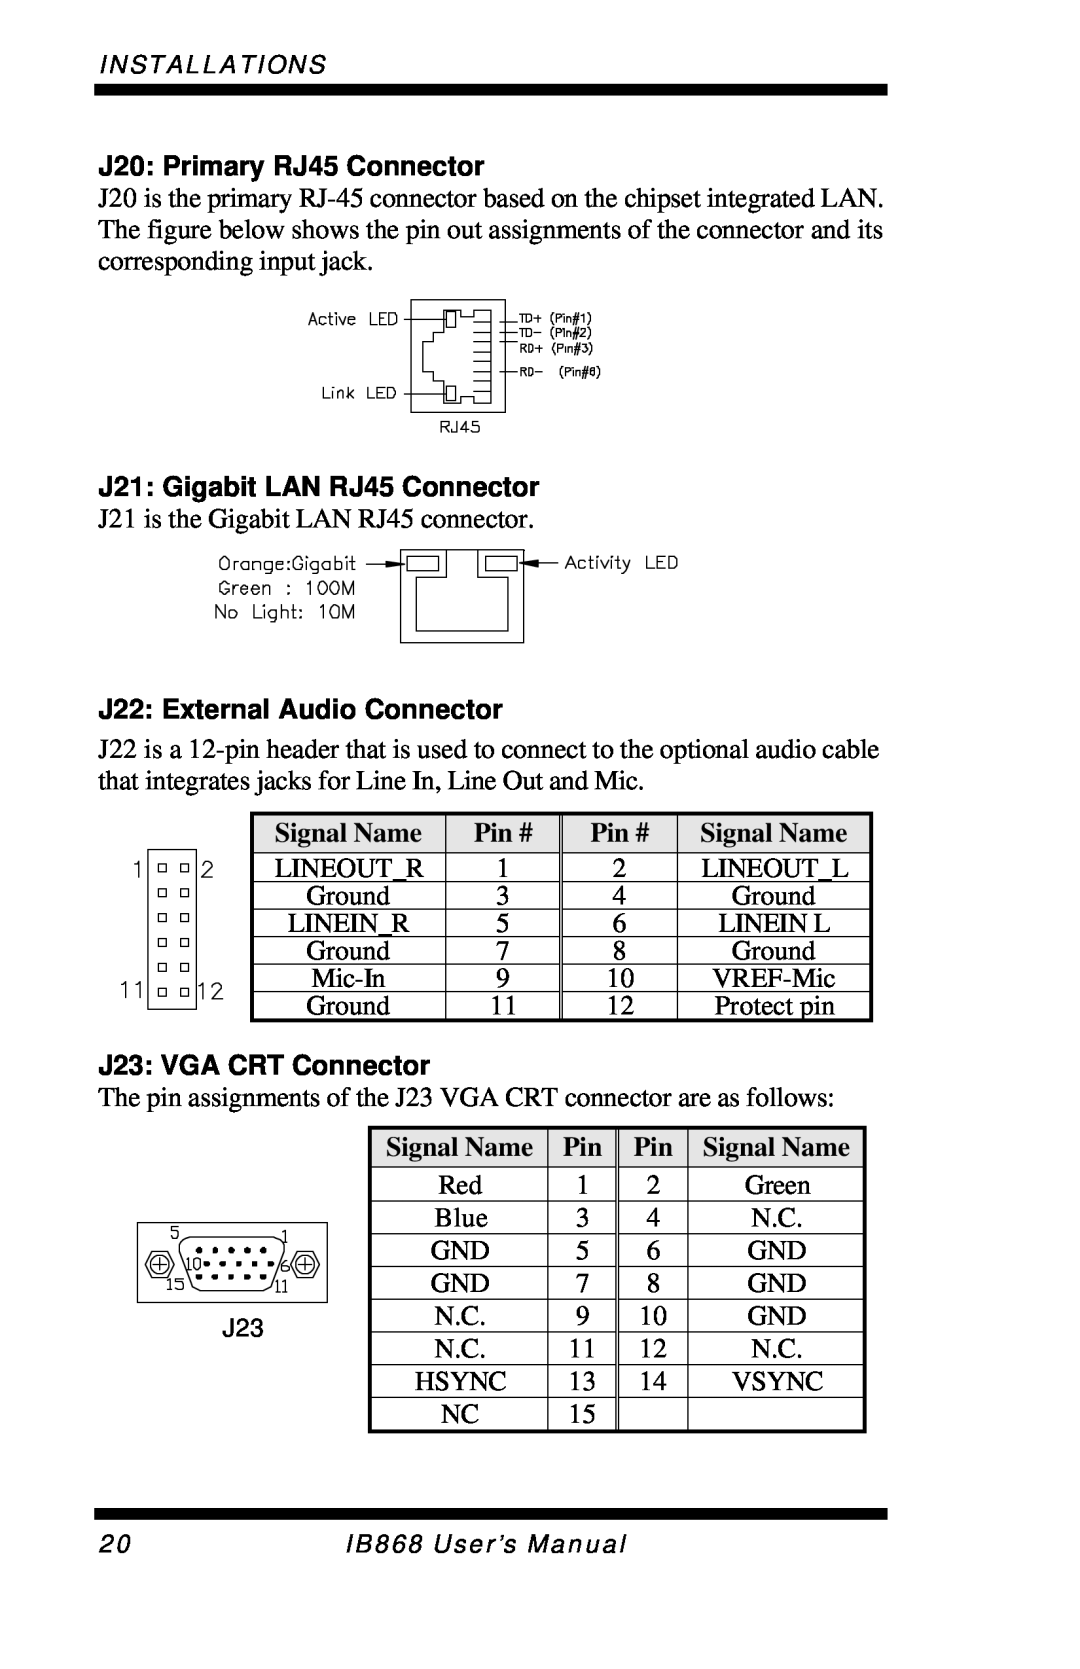 Intel IB868 user manual J20: Primary RJ45 Connector, J21 Gigabit LAN RJ45 Connector, J22: External Audio Connector 